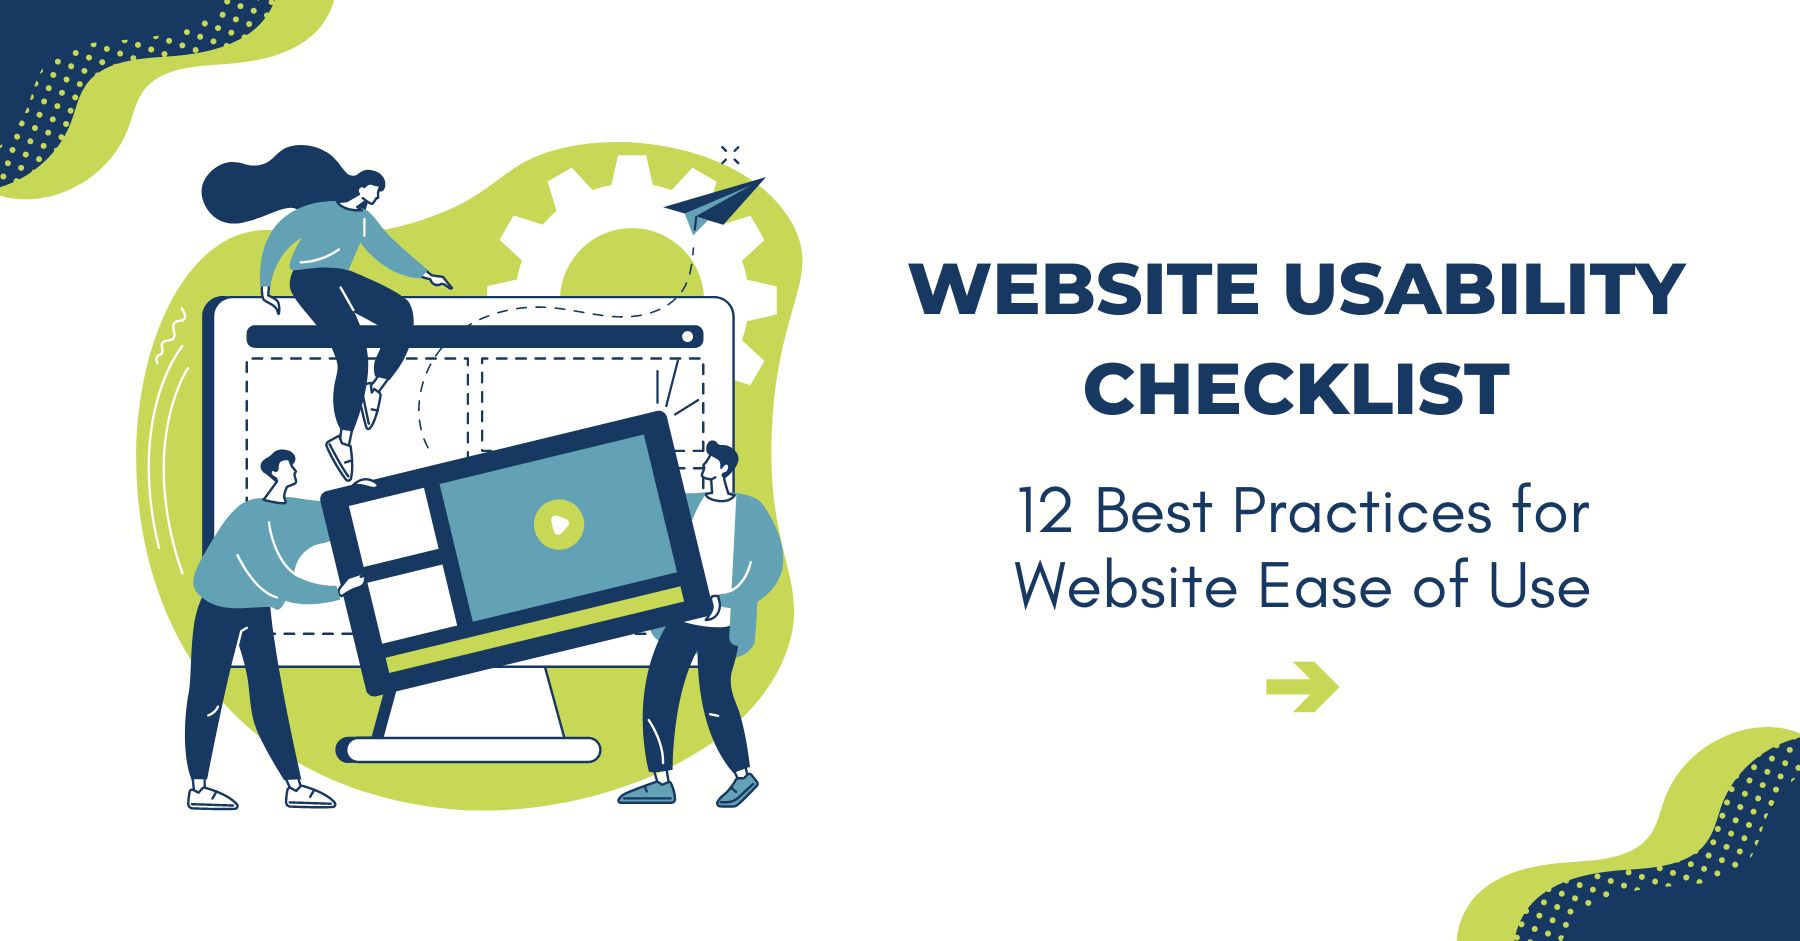 Business website usability checklist